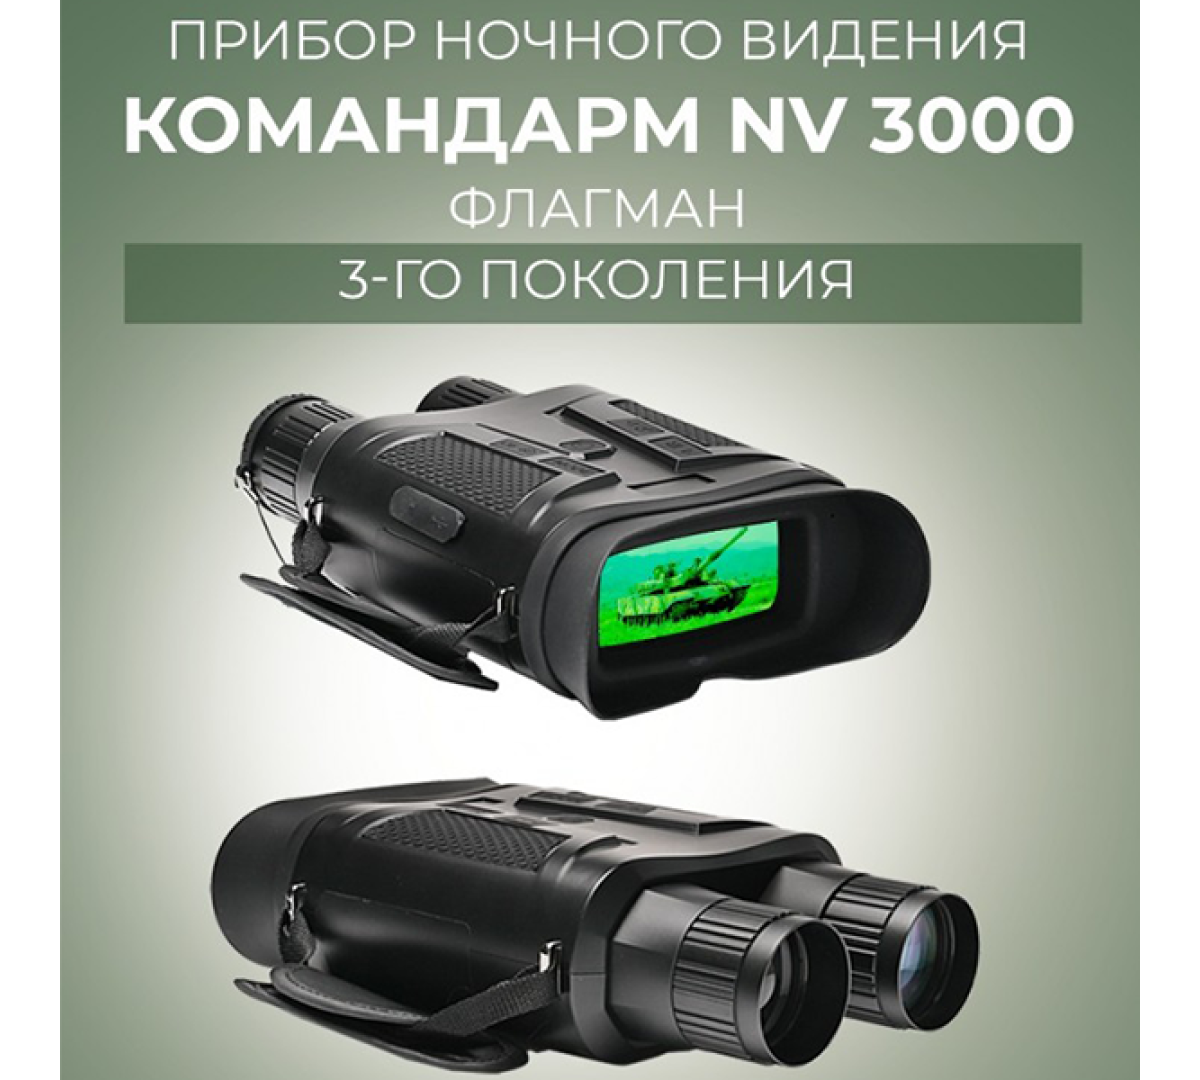 Прибор ночного видения Командарм NV 3000 Флагман